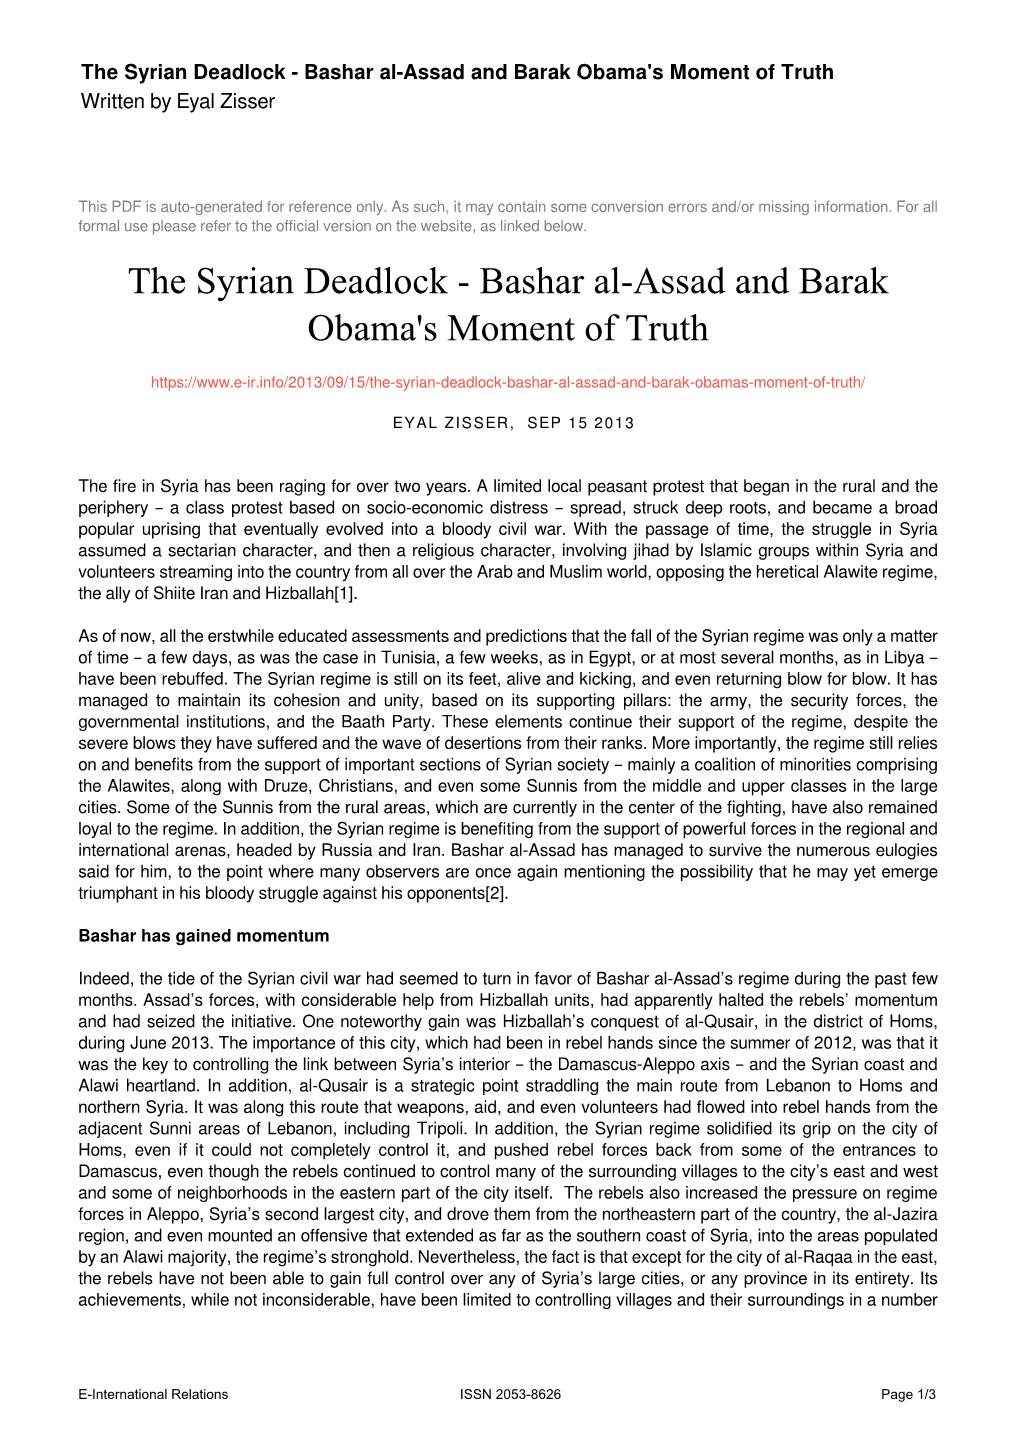 Bashar Al-Assad and Barak Obama's Moment of Truth Written by Eyal Zisser